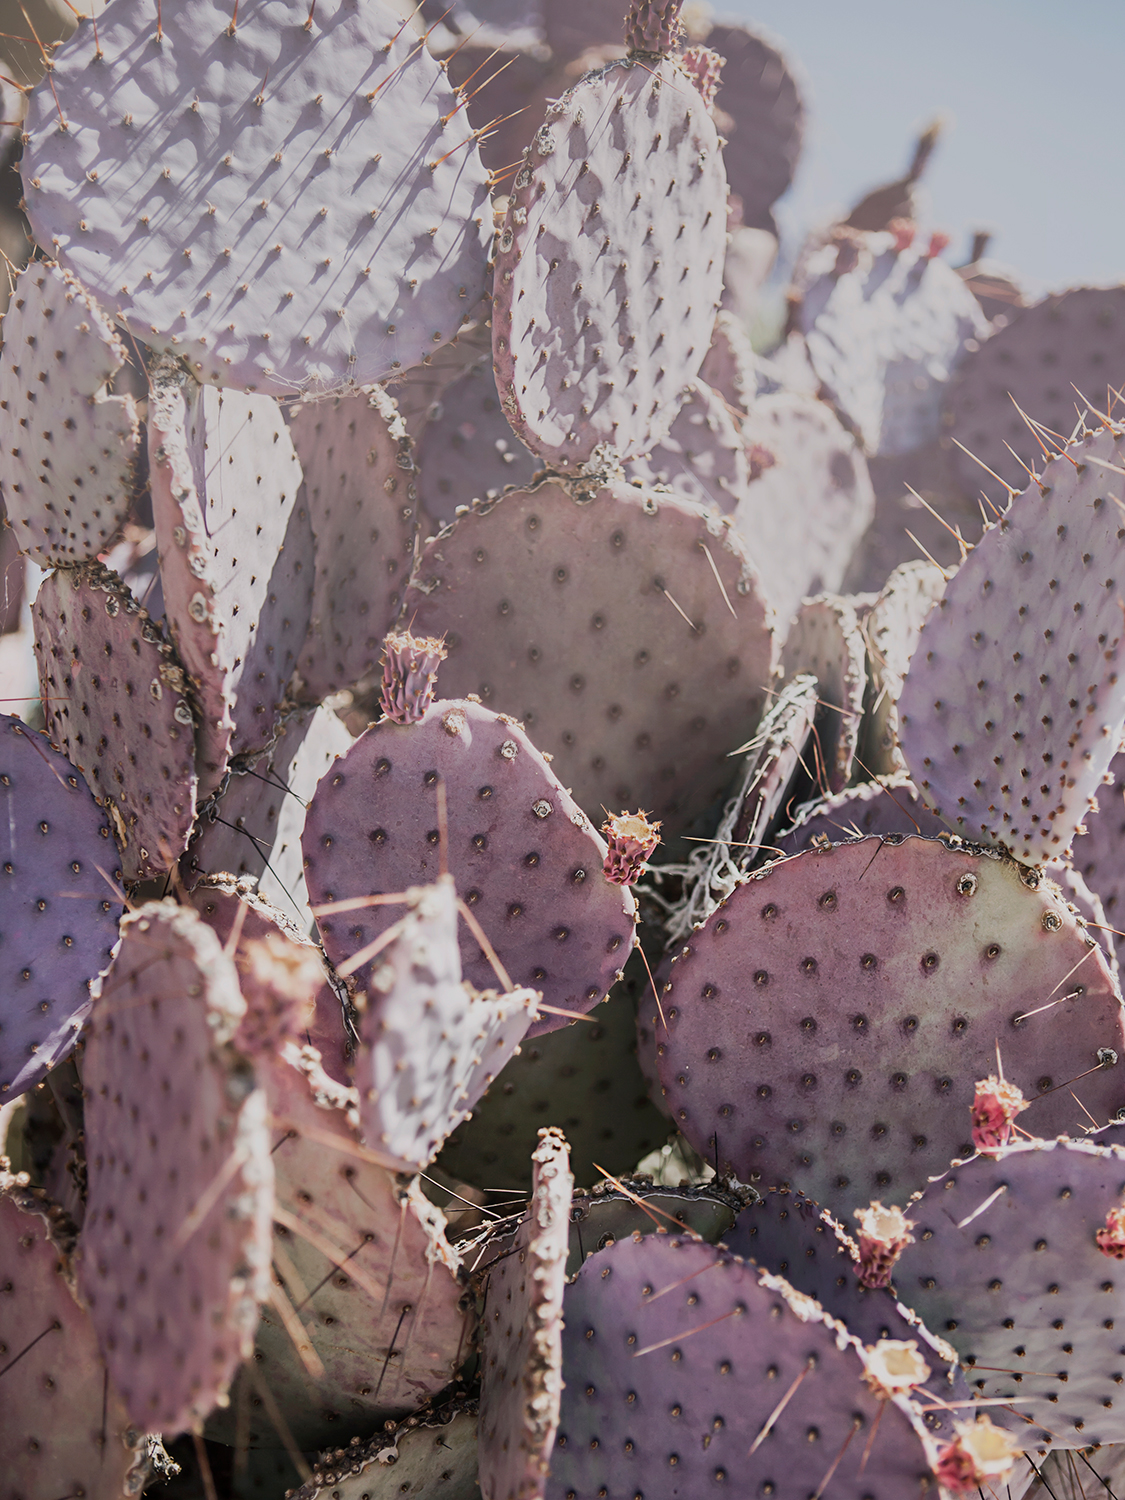 Violet cactus copyright 2016 Anna Malmberg 